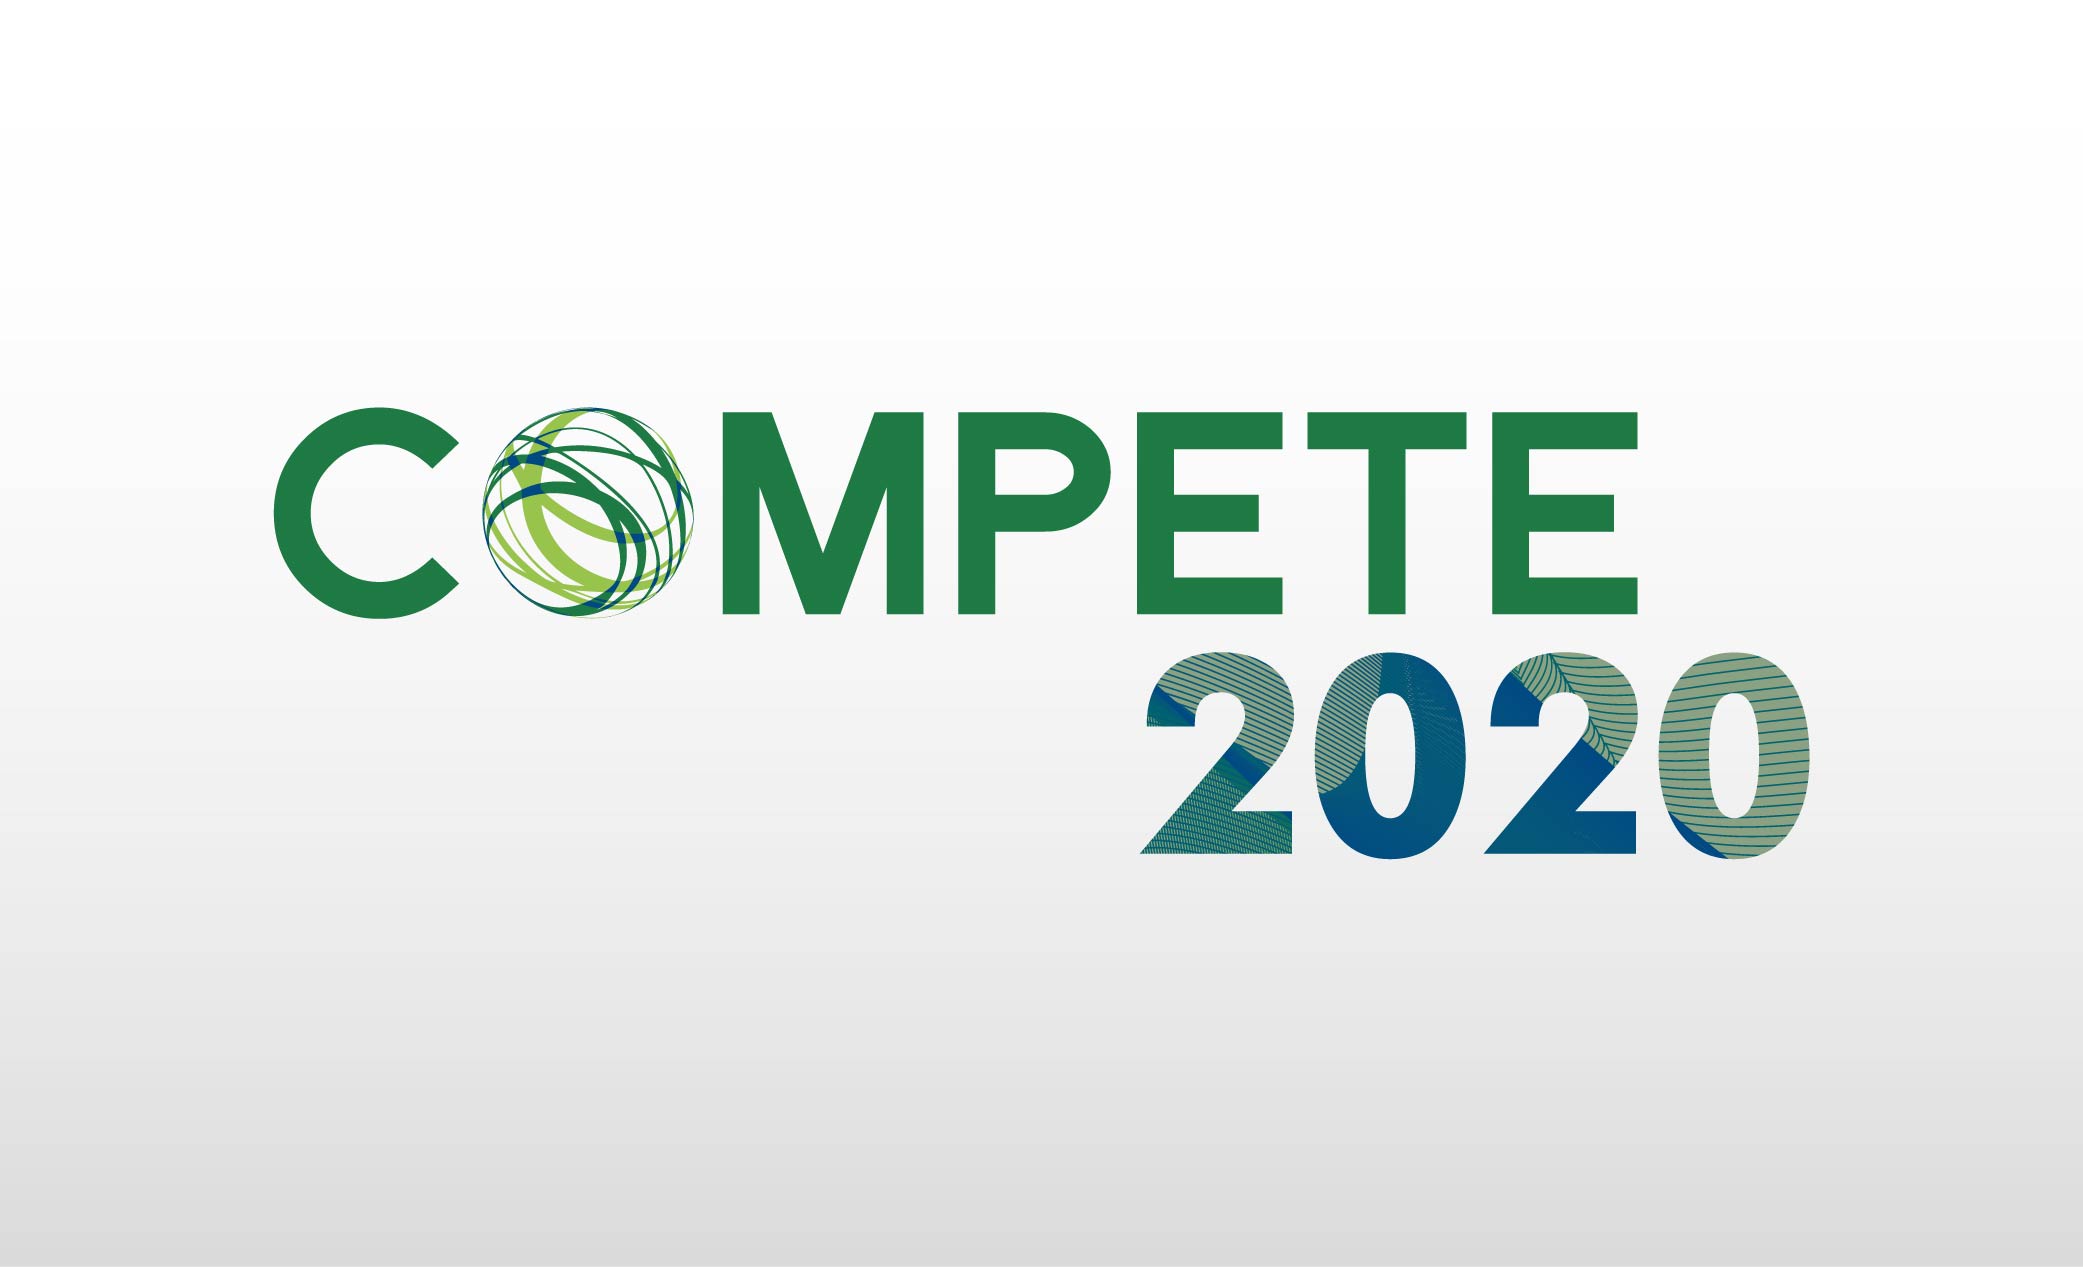 MG_COF2_Compete 2020